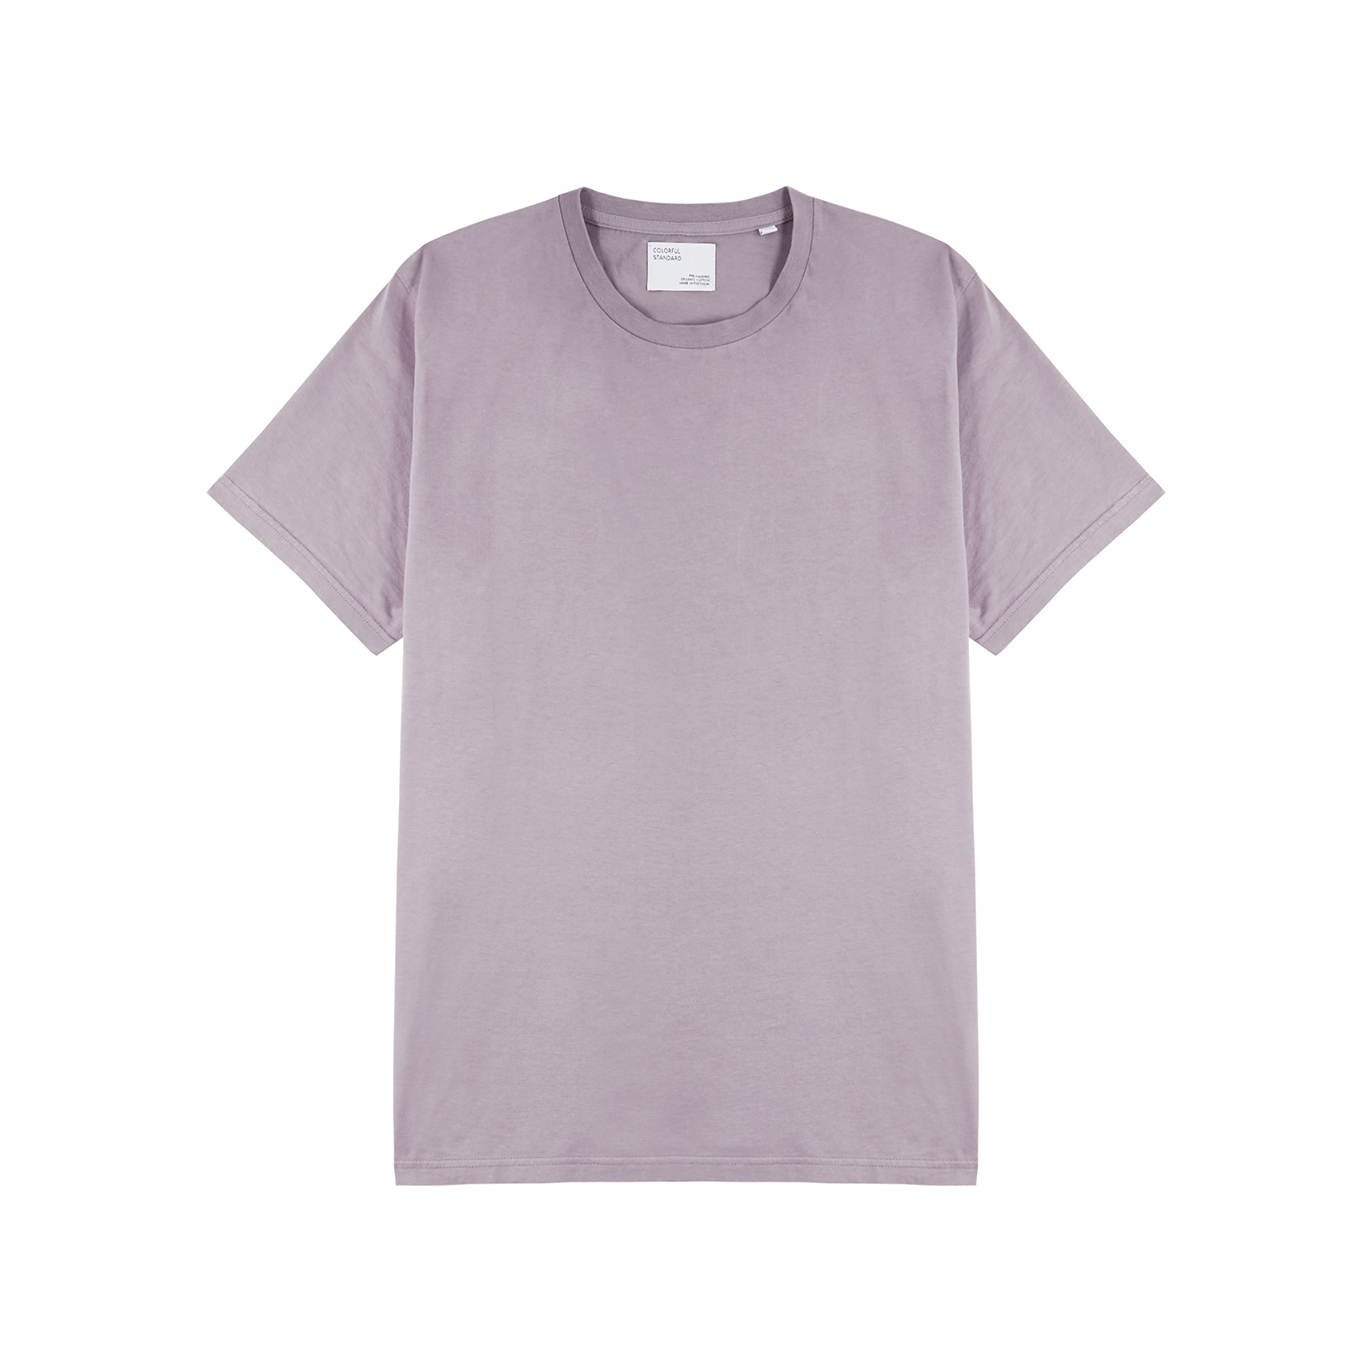 Colorful Standard Lilac Cotton T-shirt